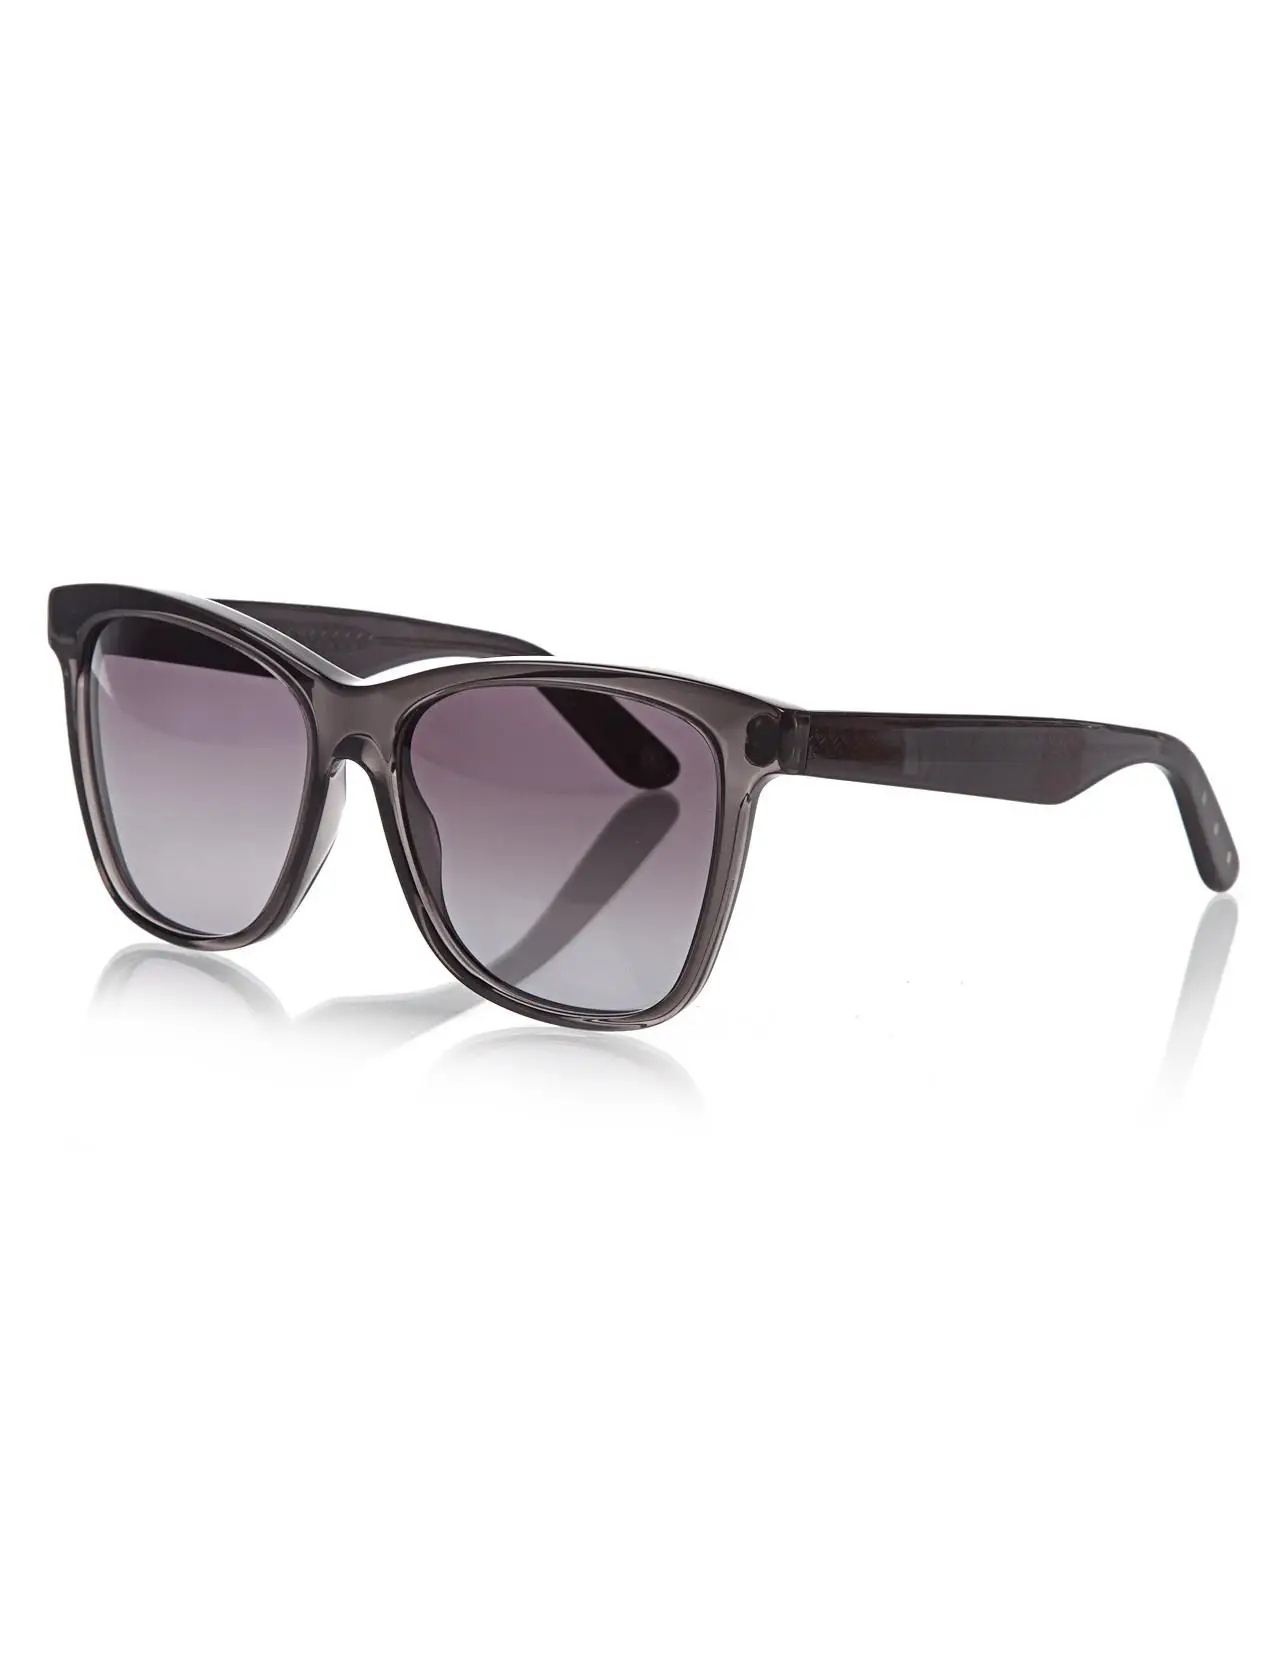 

Unisex sunglasses b.v 265/s 4py 55 hd bone smoked organic square square 55-16-140 bottega veneta